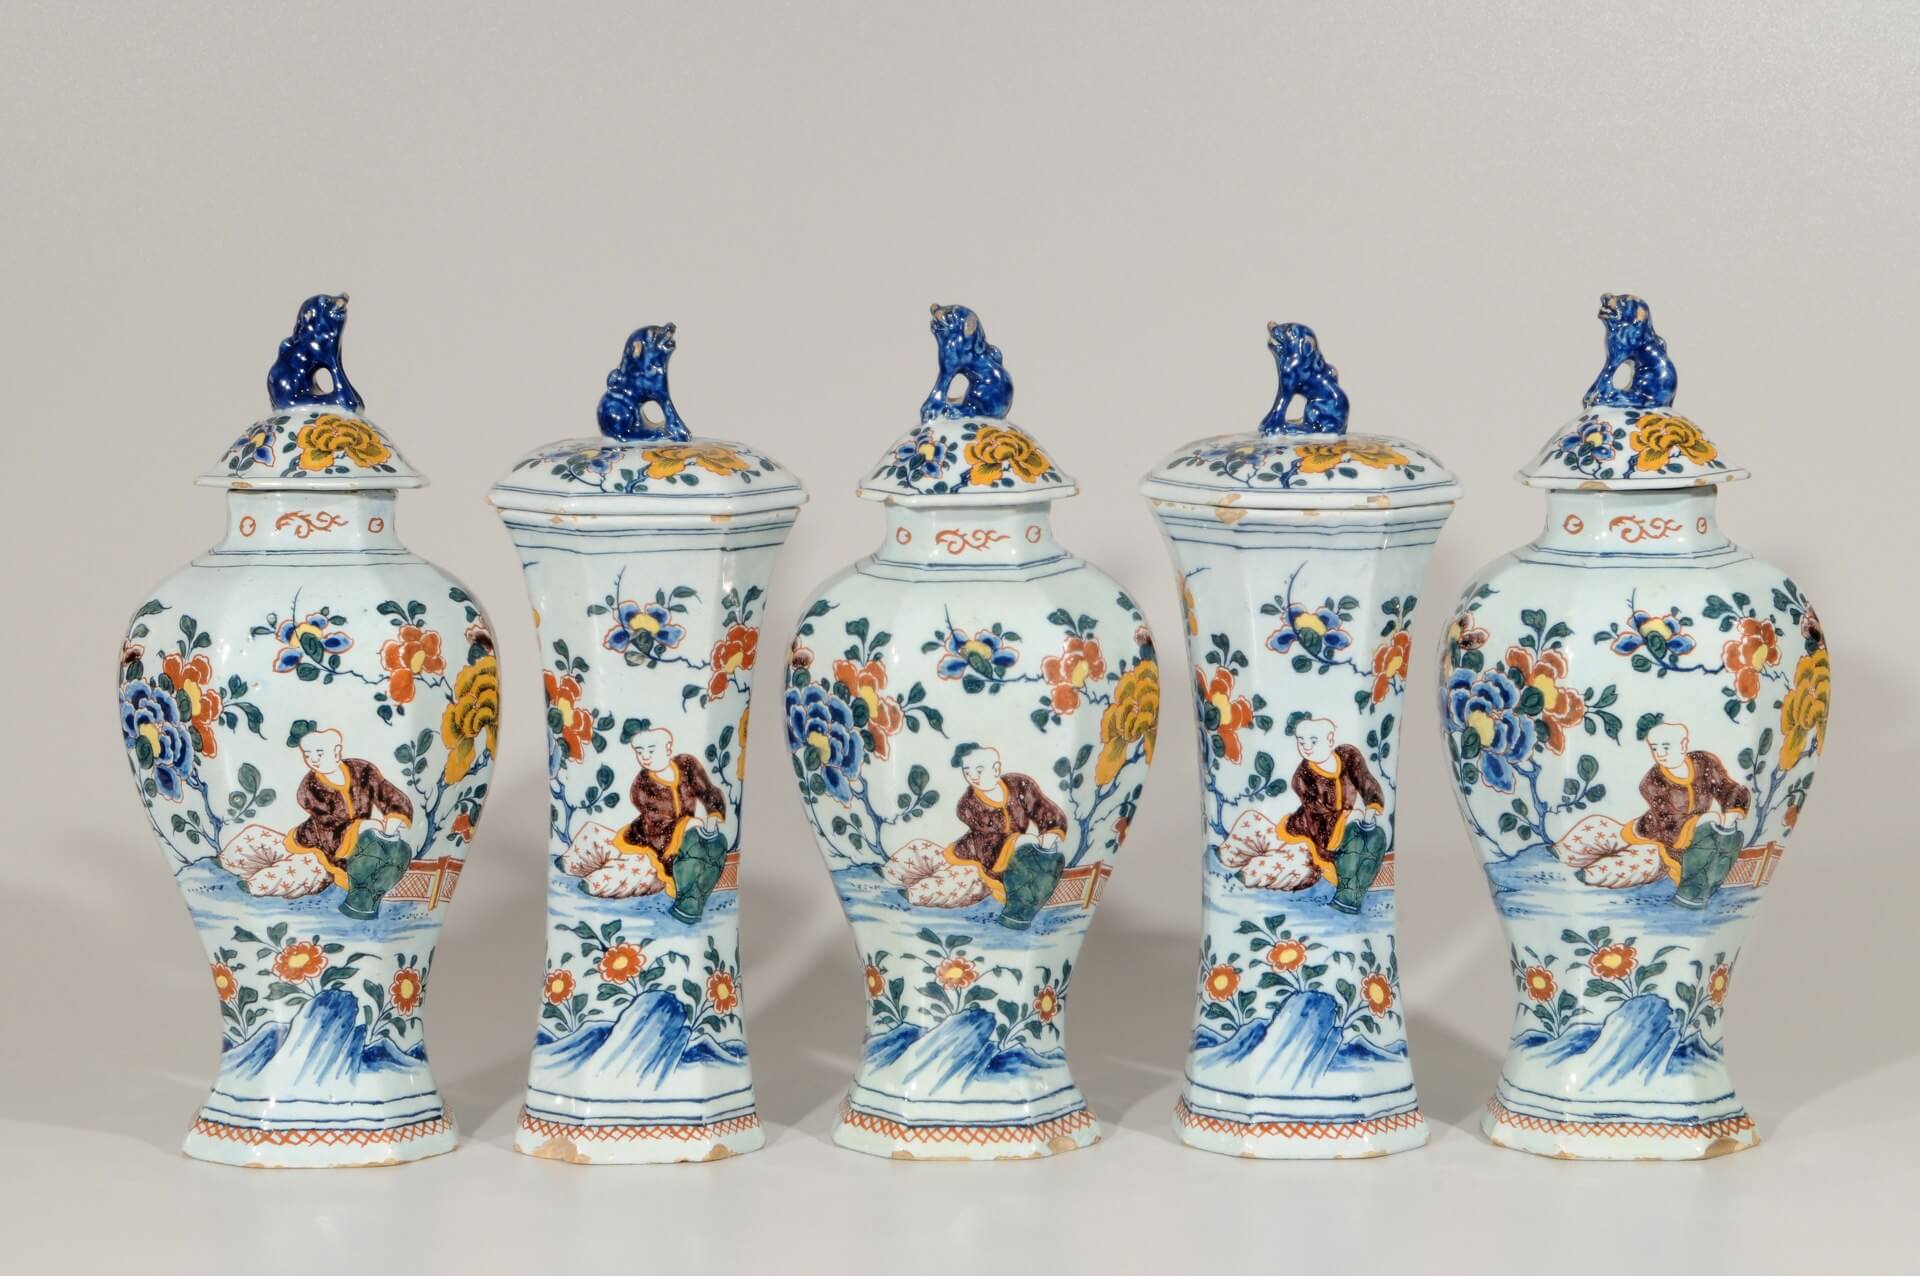 Garniture of polychrome vases antique Delft pottery